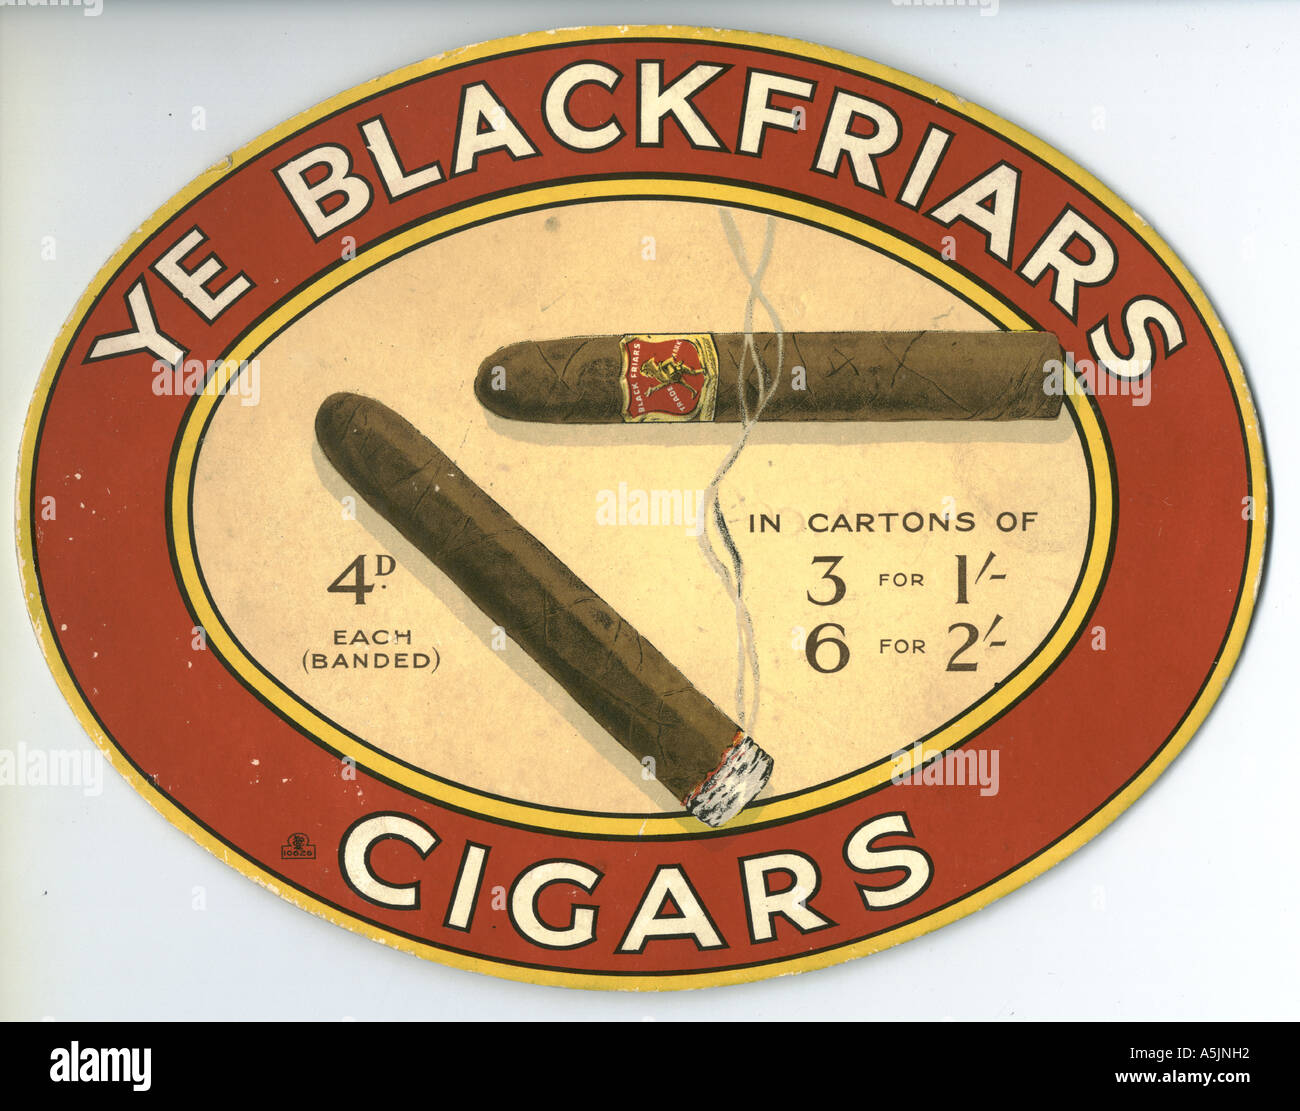 Blackfriars Cigars showcard circa 1900 Stock Photo